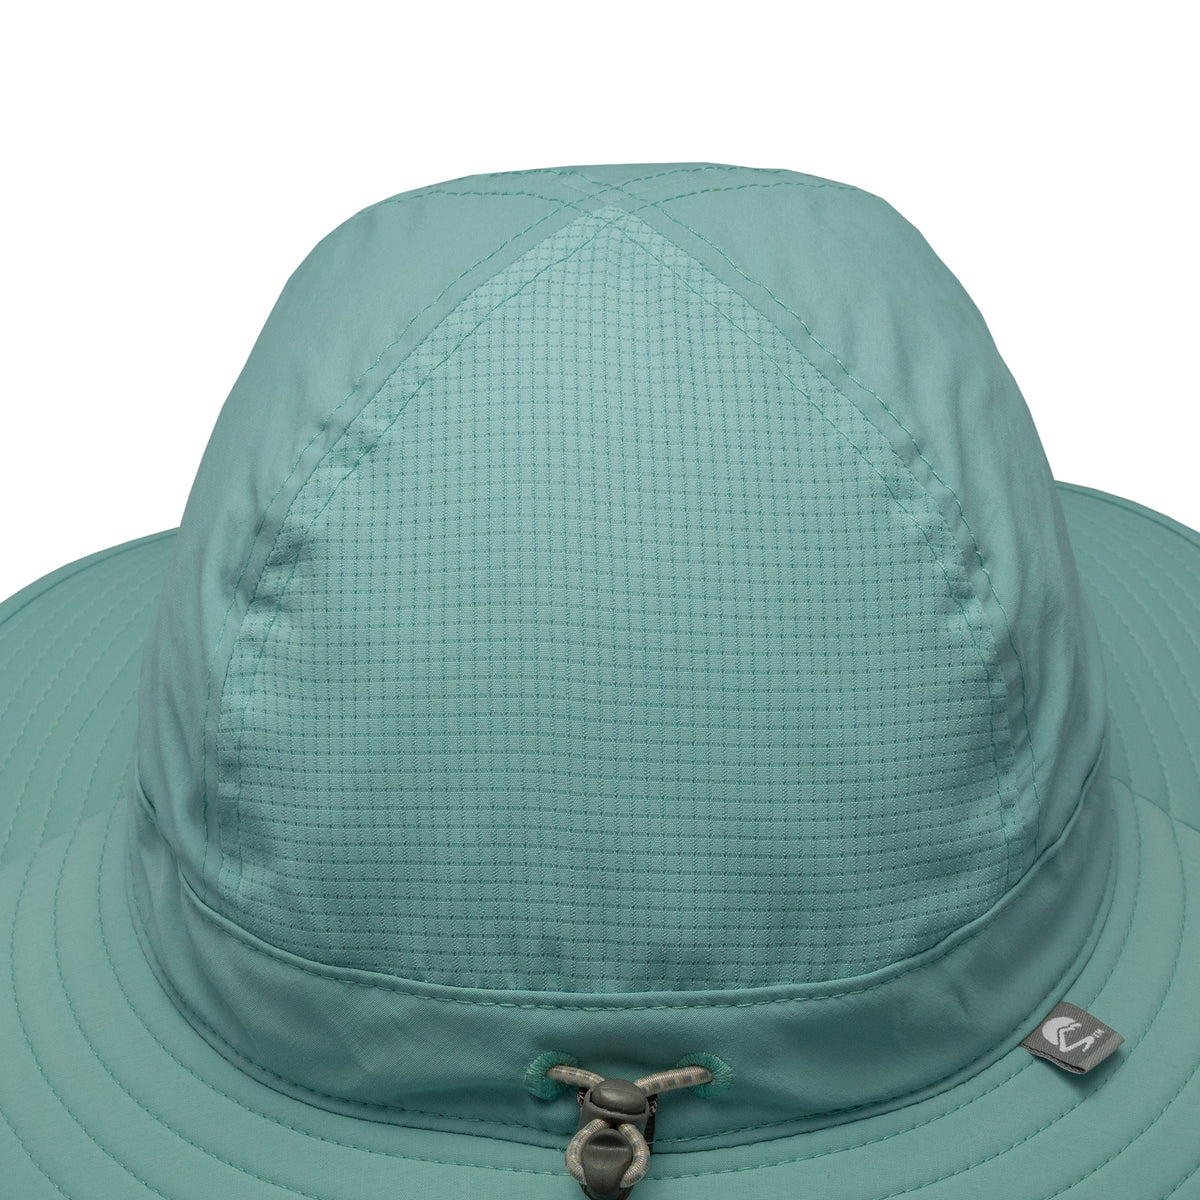 Columbia Blue Fishing Hats & Headwear for sale